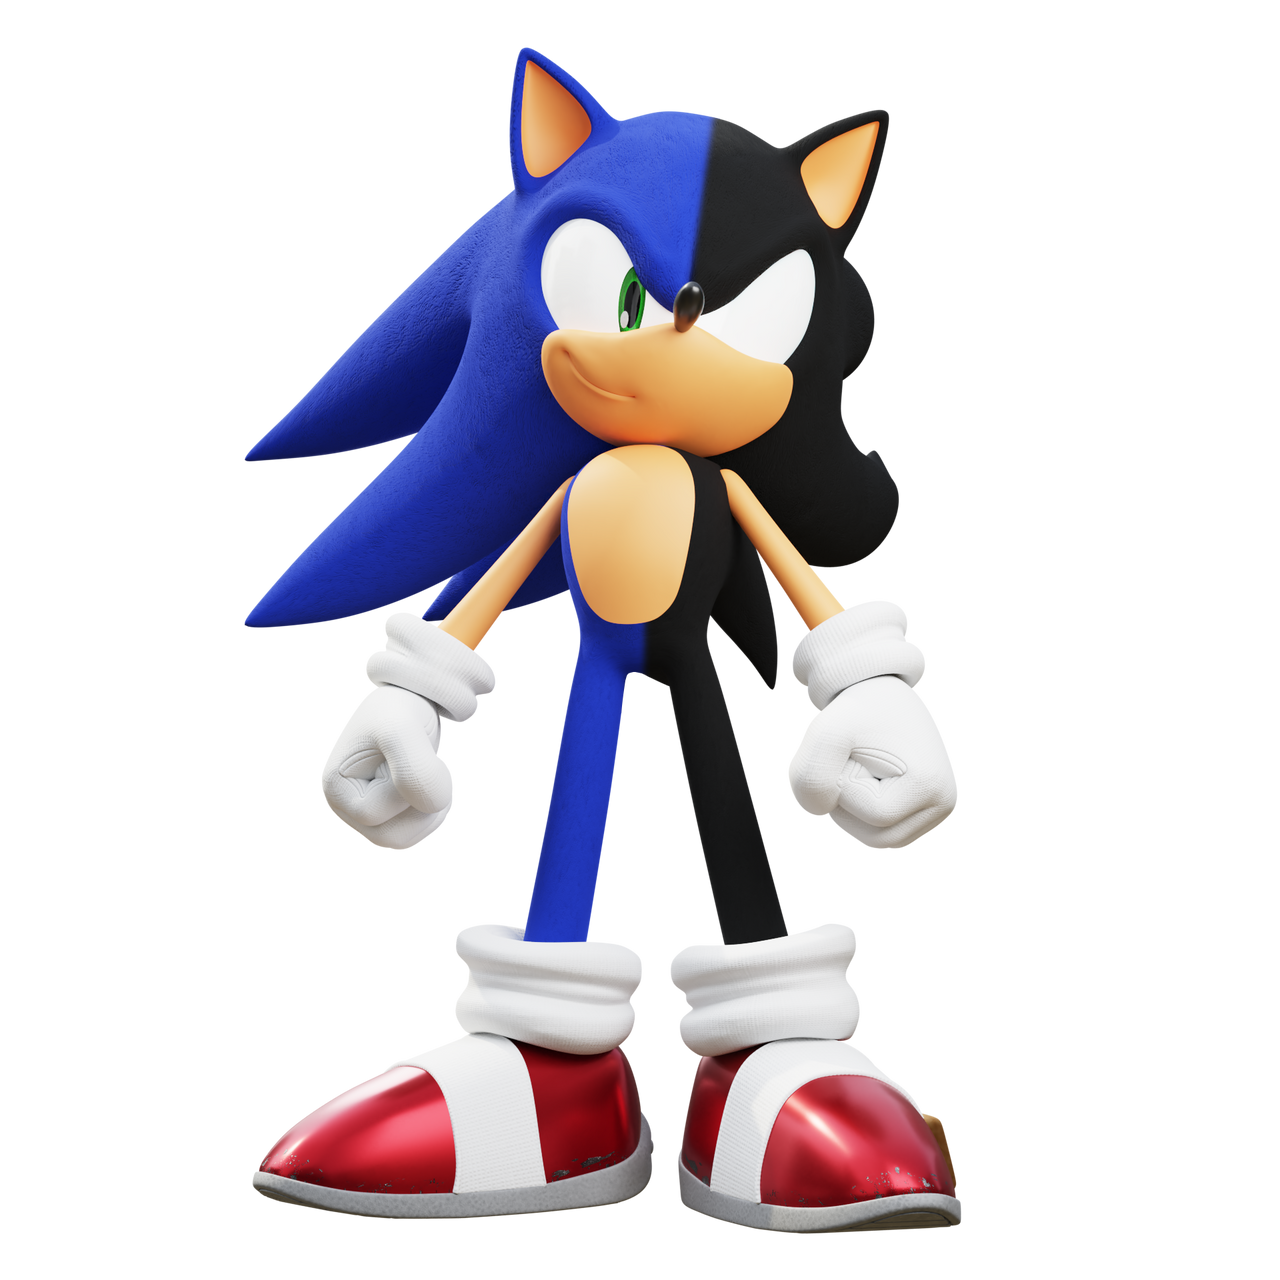 A new render of Dark Sonic!